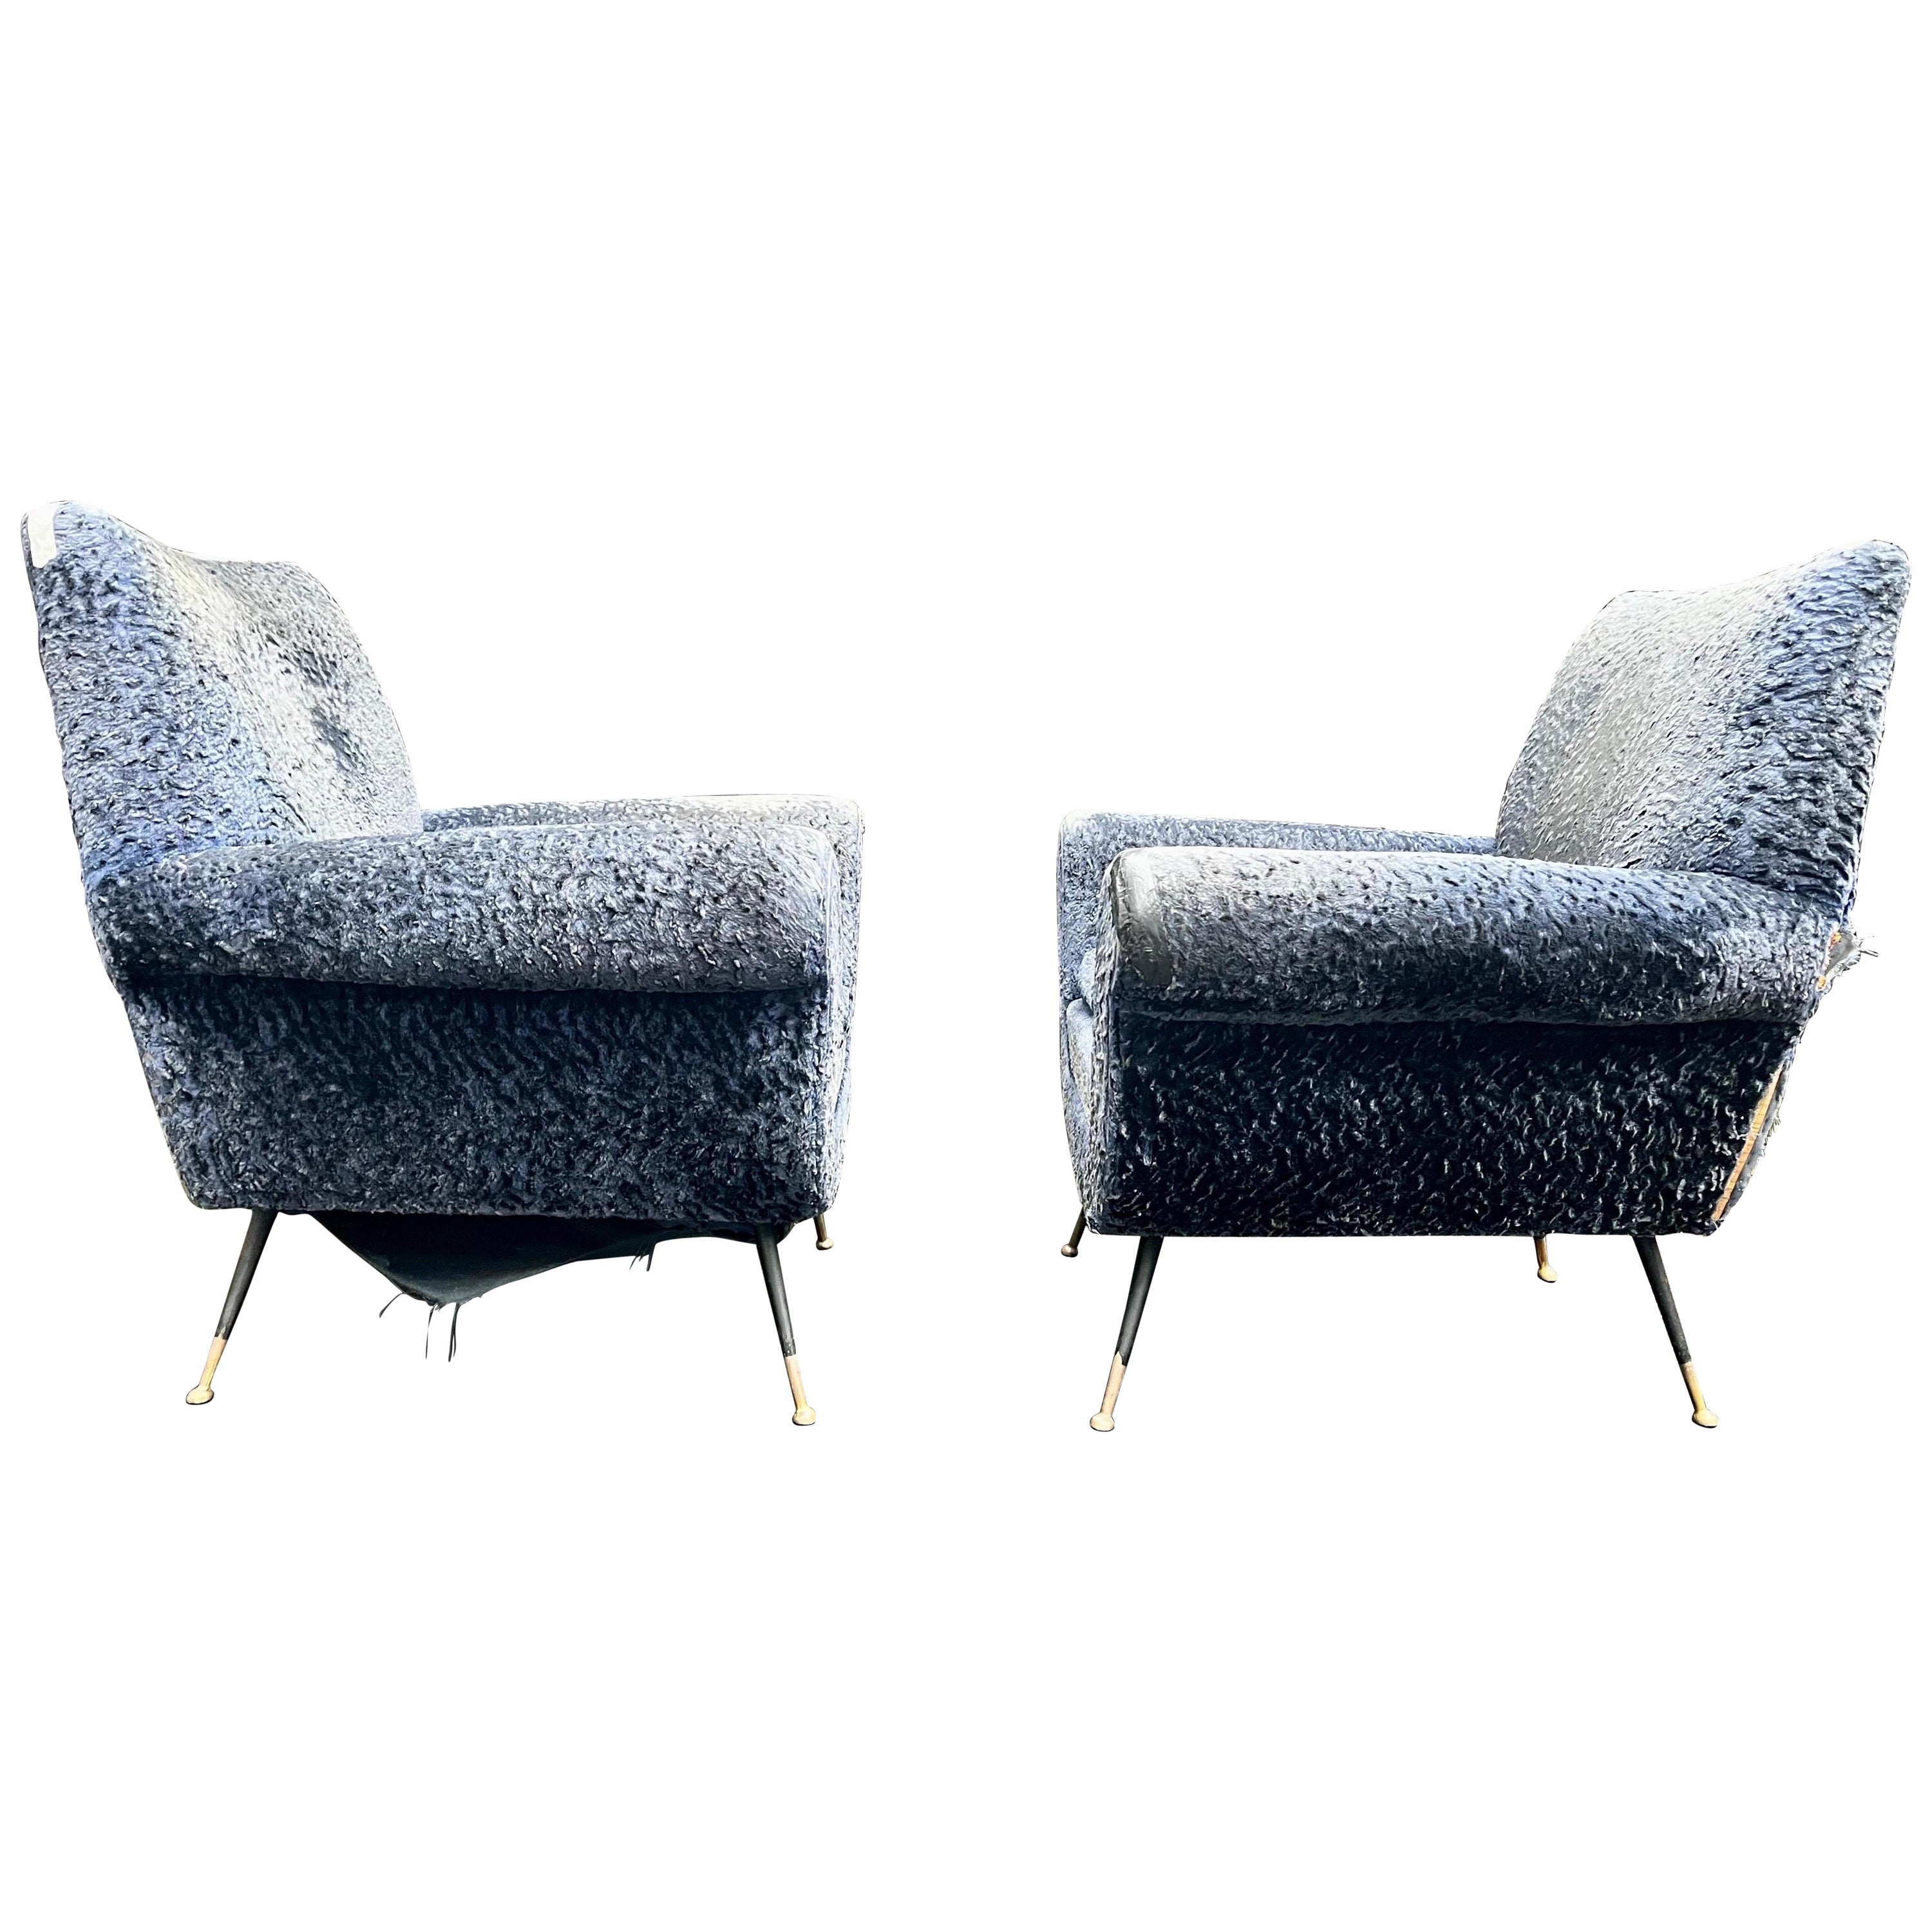 Pair of Gigi Radice Club Chairs for Minotti, c. 1950 (for restoration)